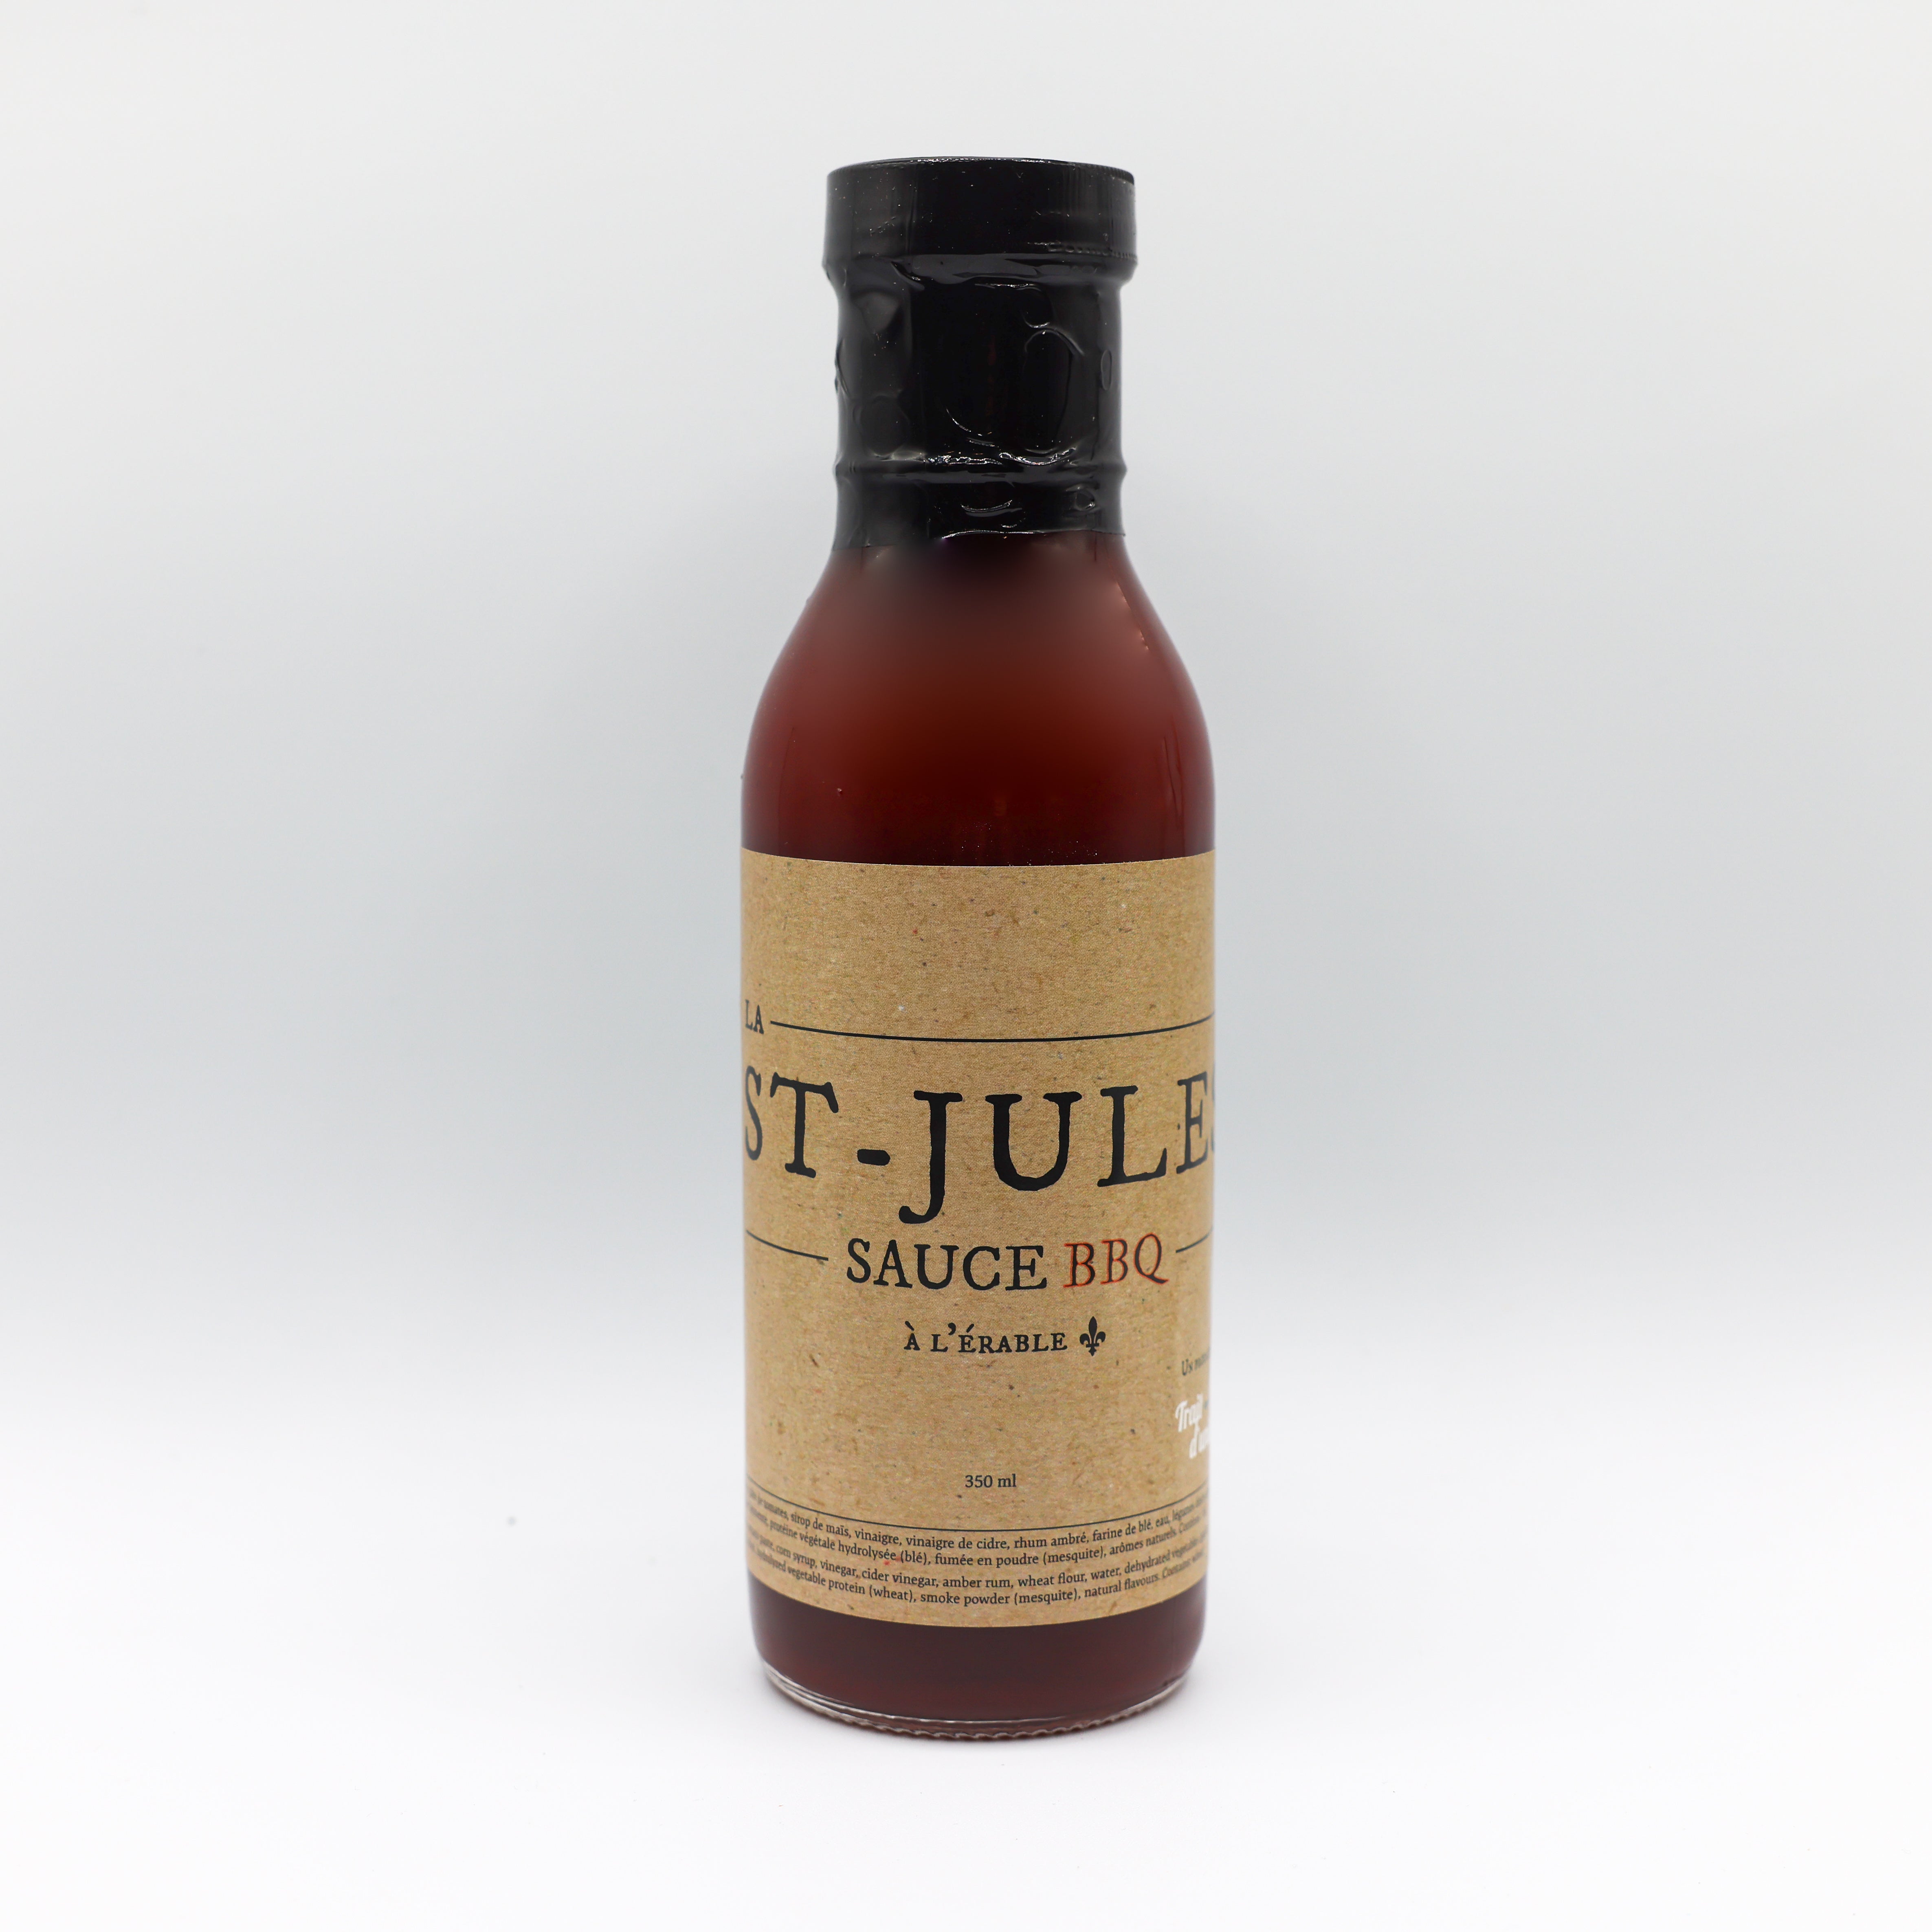 Sauce Saint-Jules